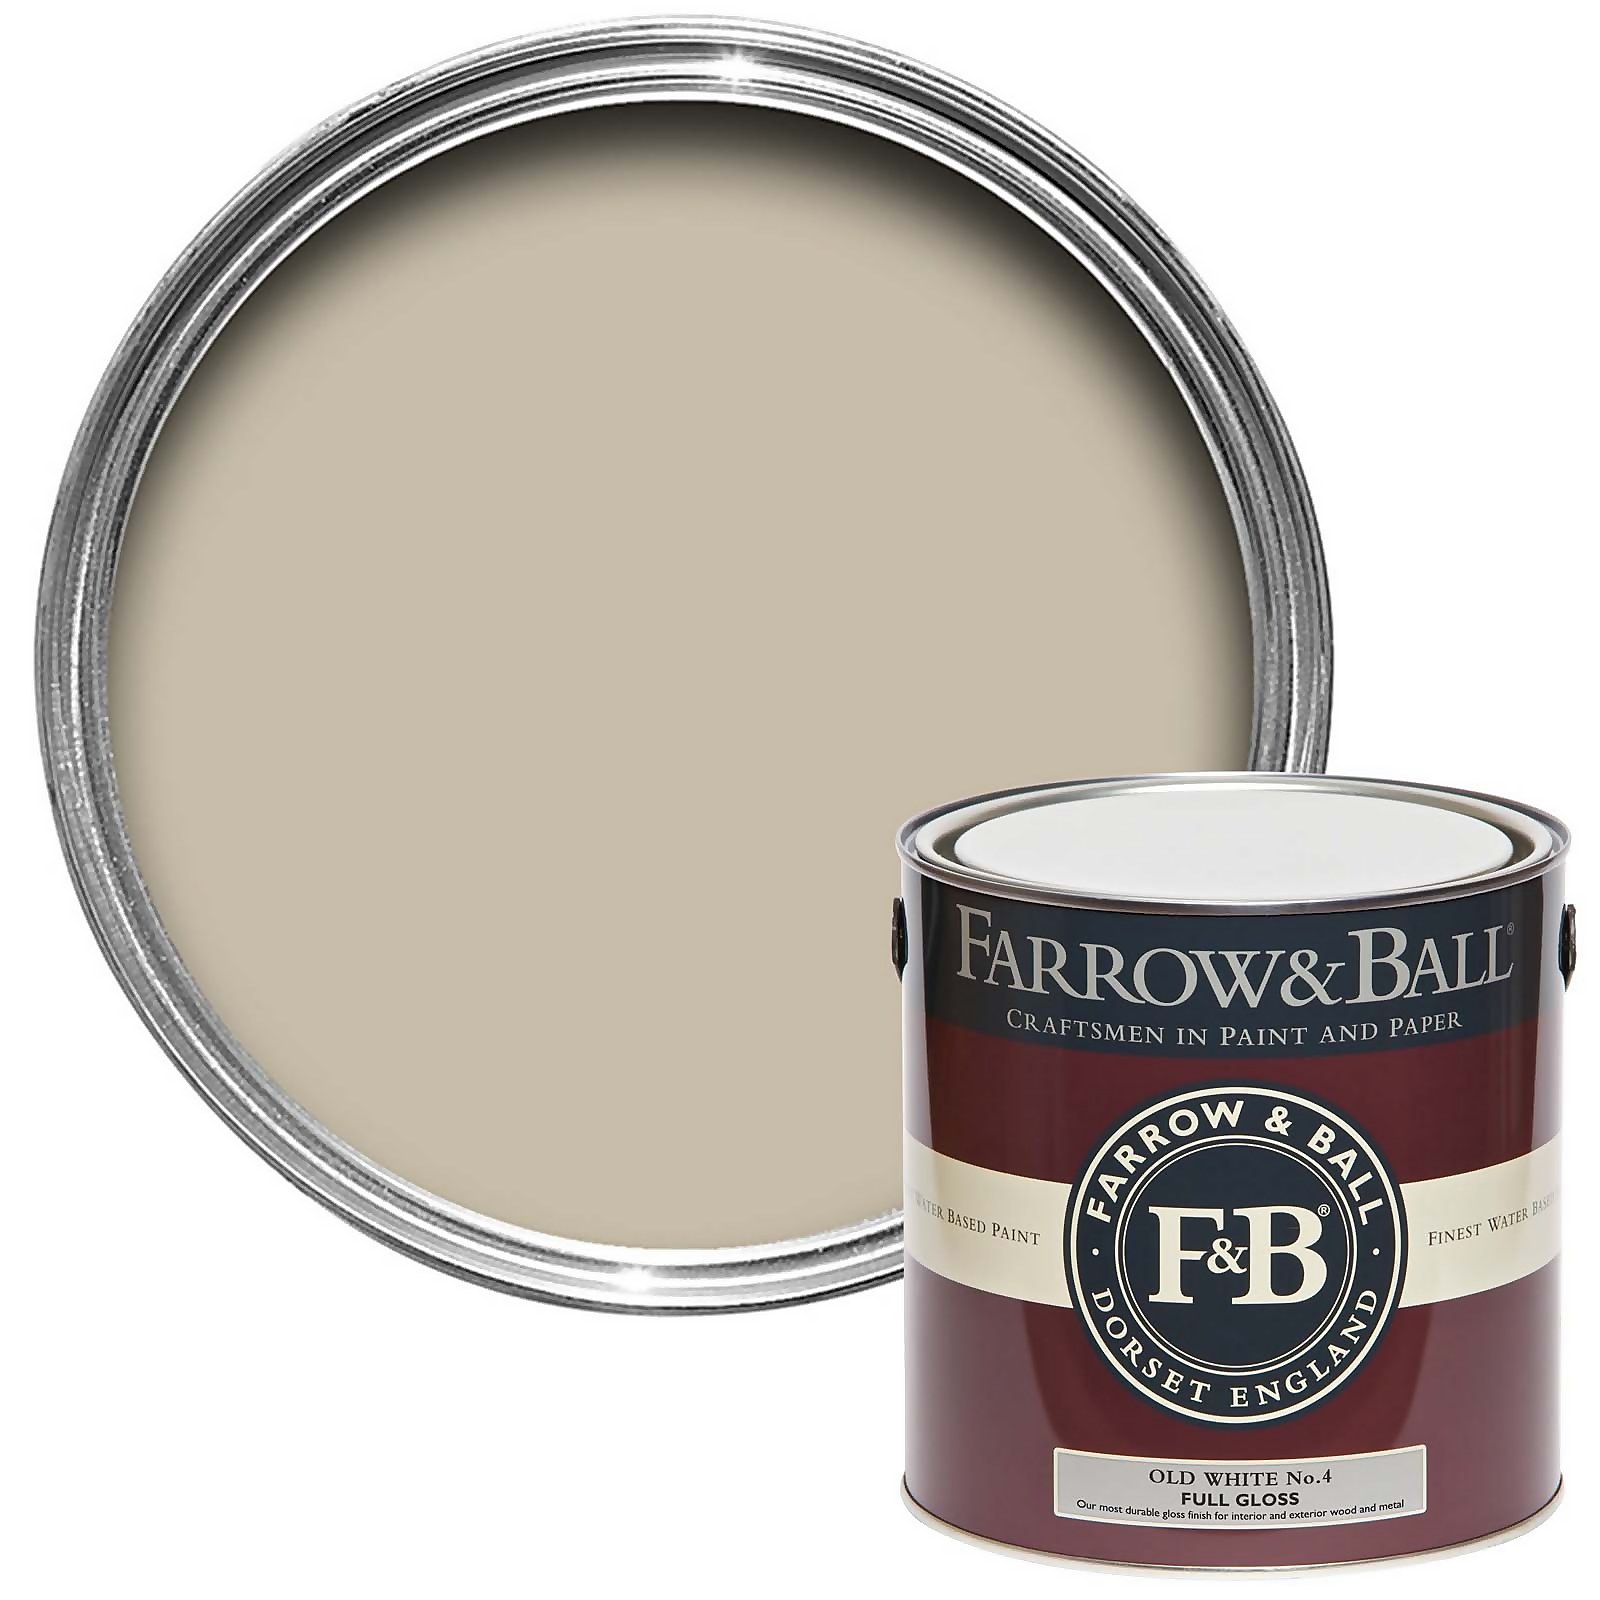 Farrow & Ball Full Gloss Paint Old White No.4 - 2.5L